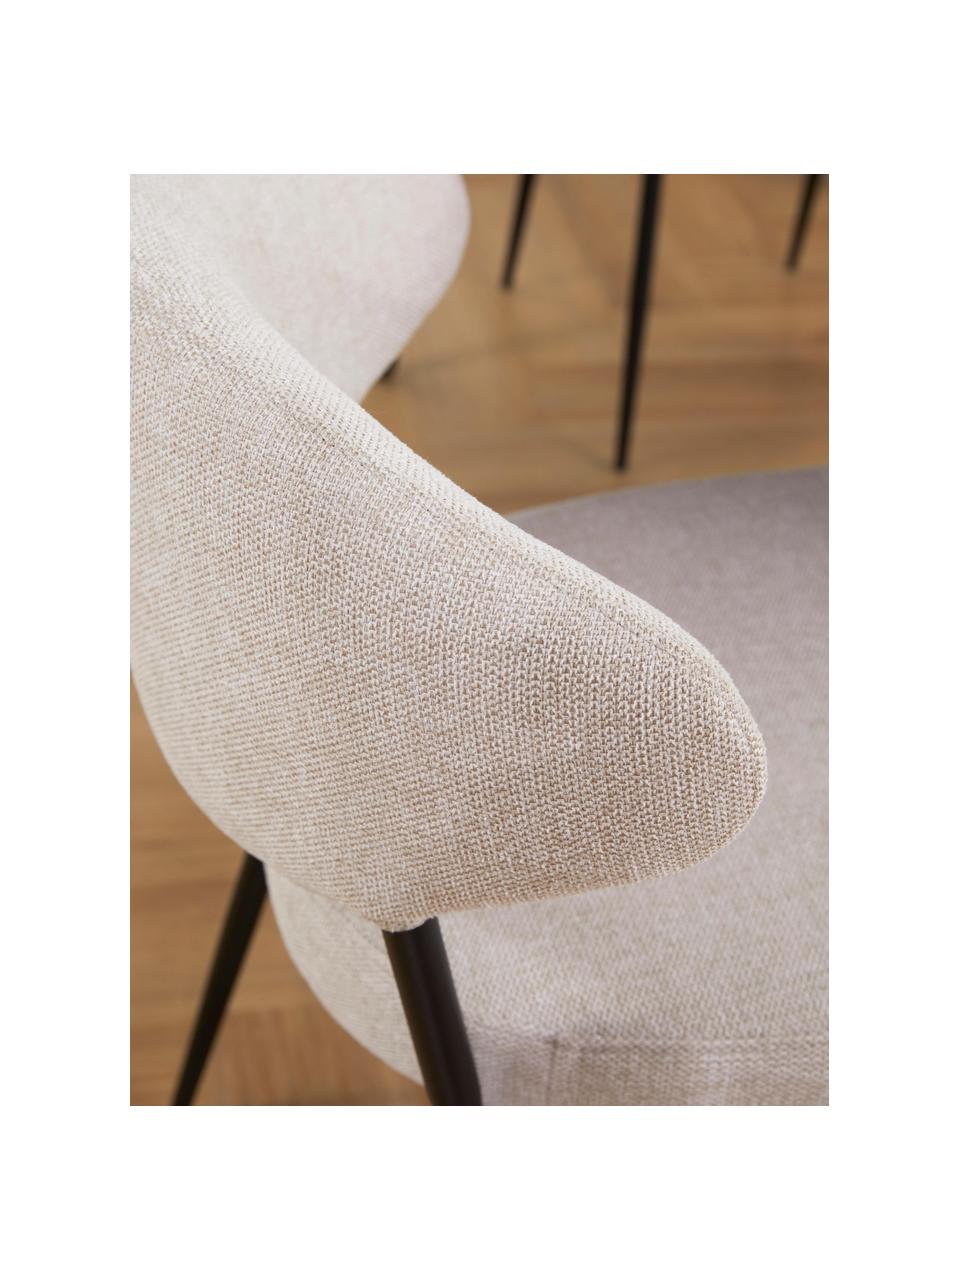 Gestoffeerde stoelen Adele, 2 stuks, Bekleding: 95% polyester, 5% nylon M, Frame: gepoedercoat metaal, Geweven stof lichtbeige, B 54 x H 57 cm